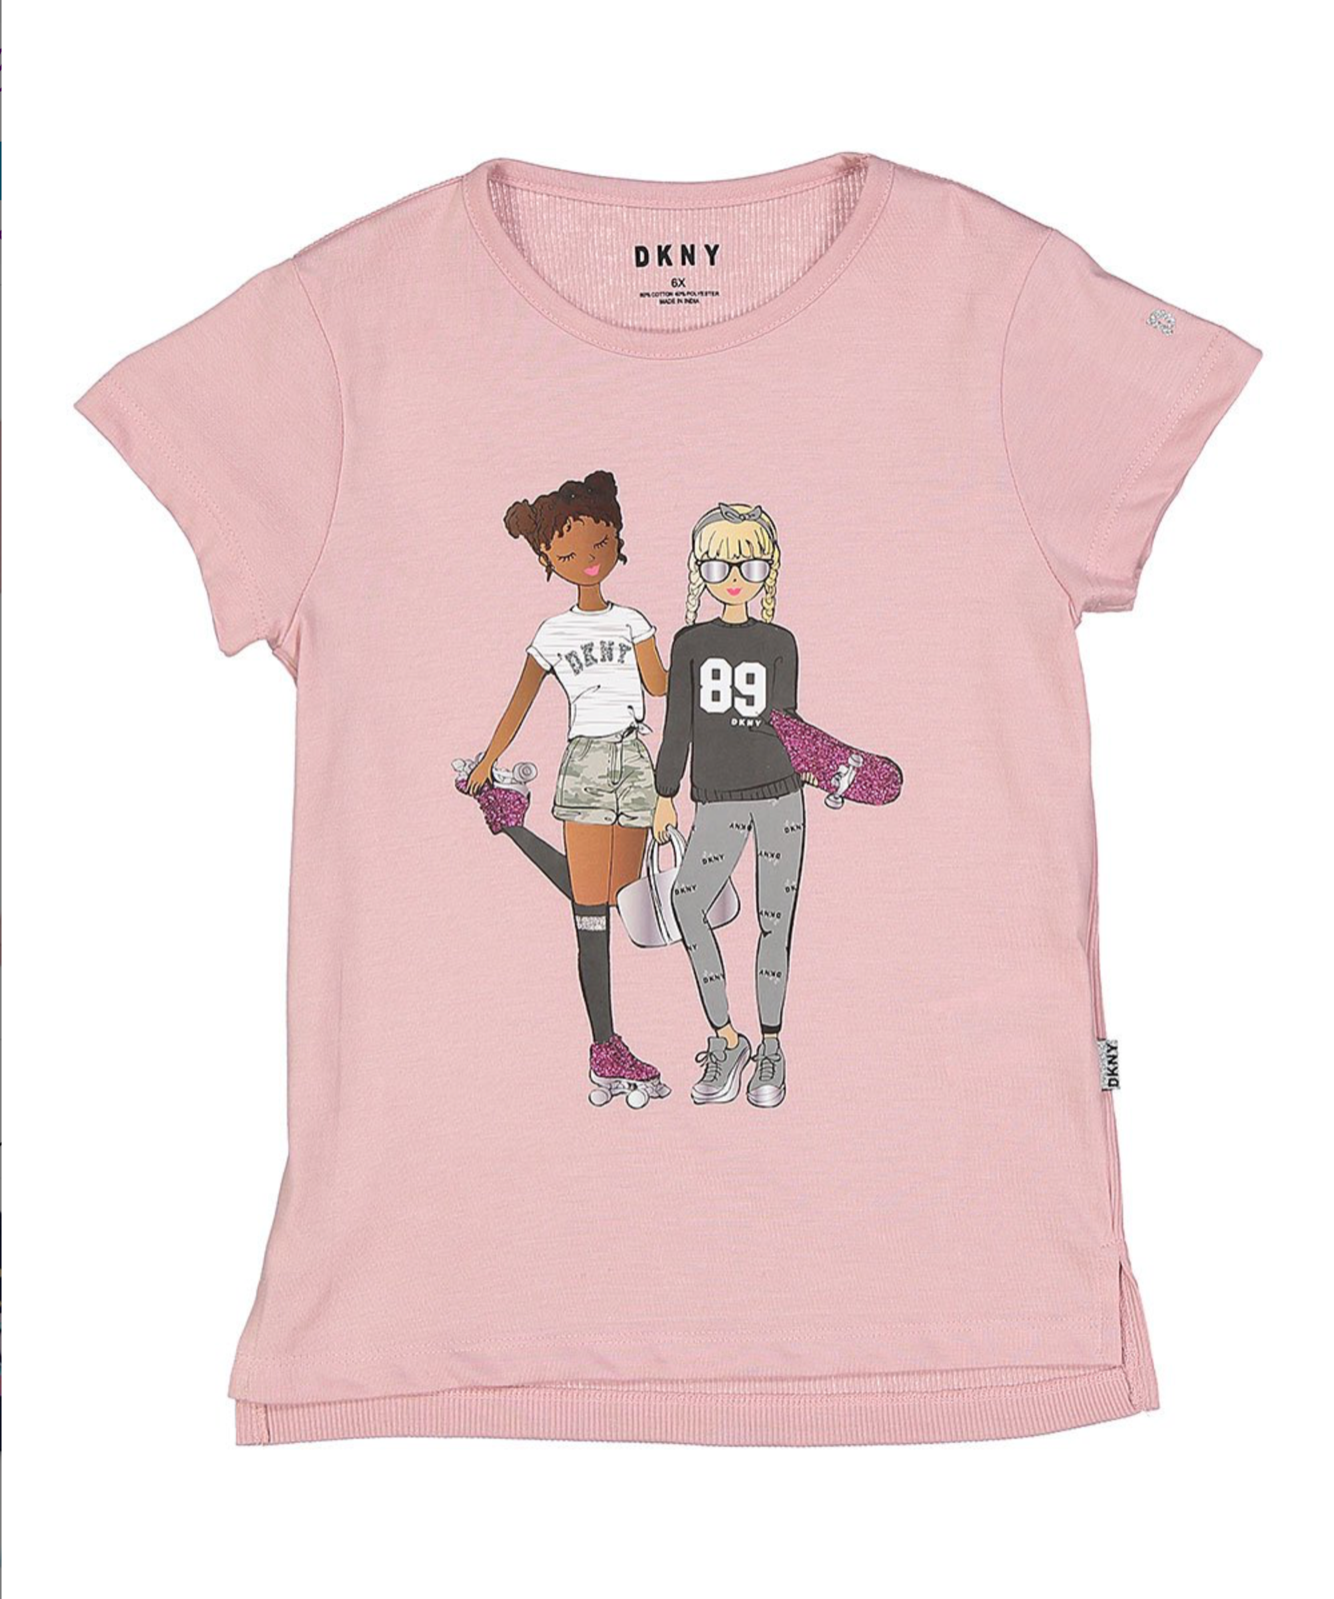 Primary image for DKNY Girls' Little Short Sleeve Zephyr Roller Tee Size 6